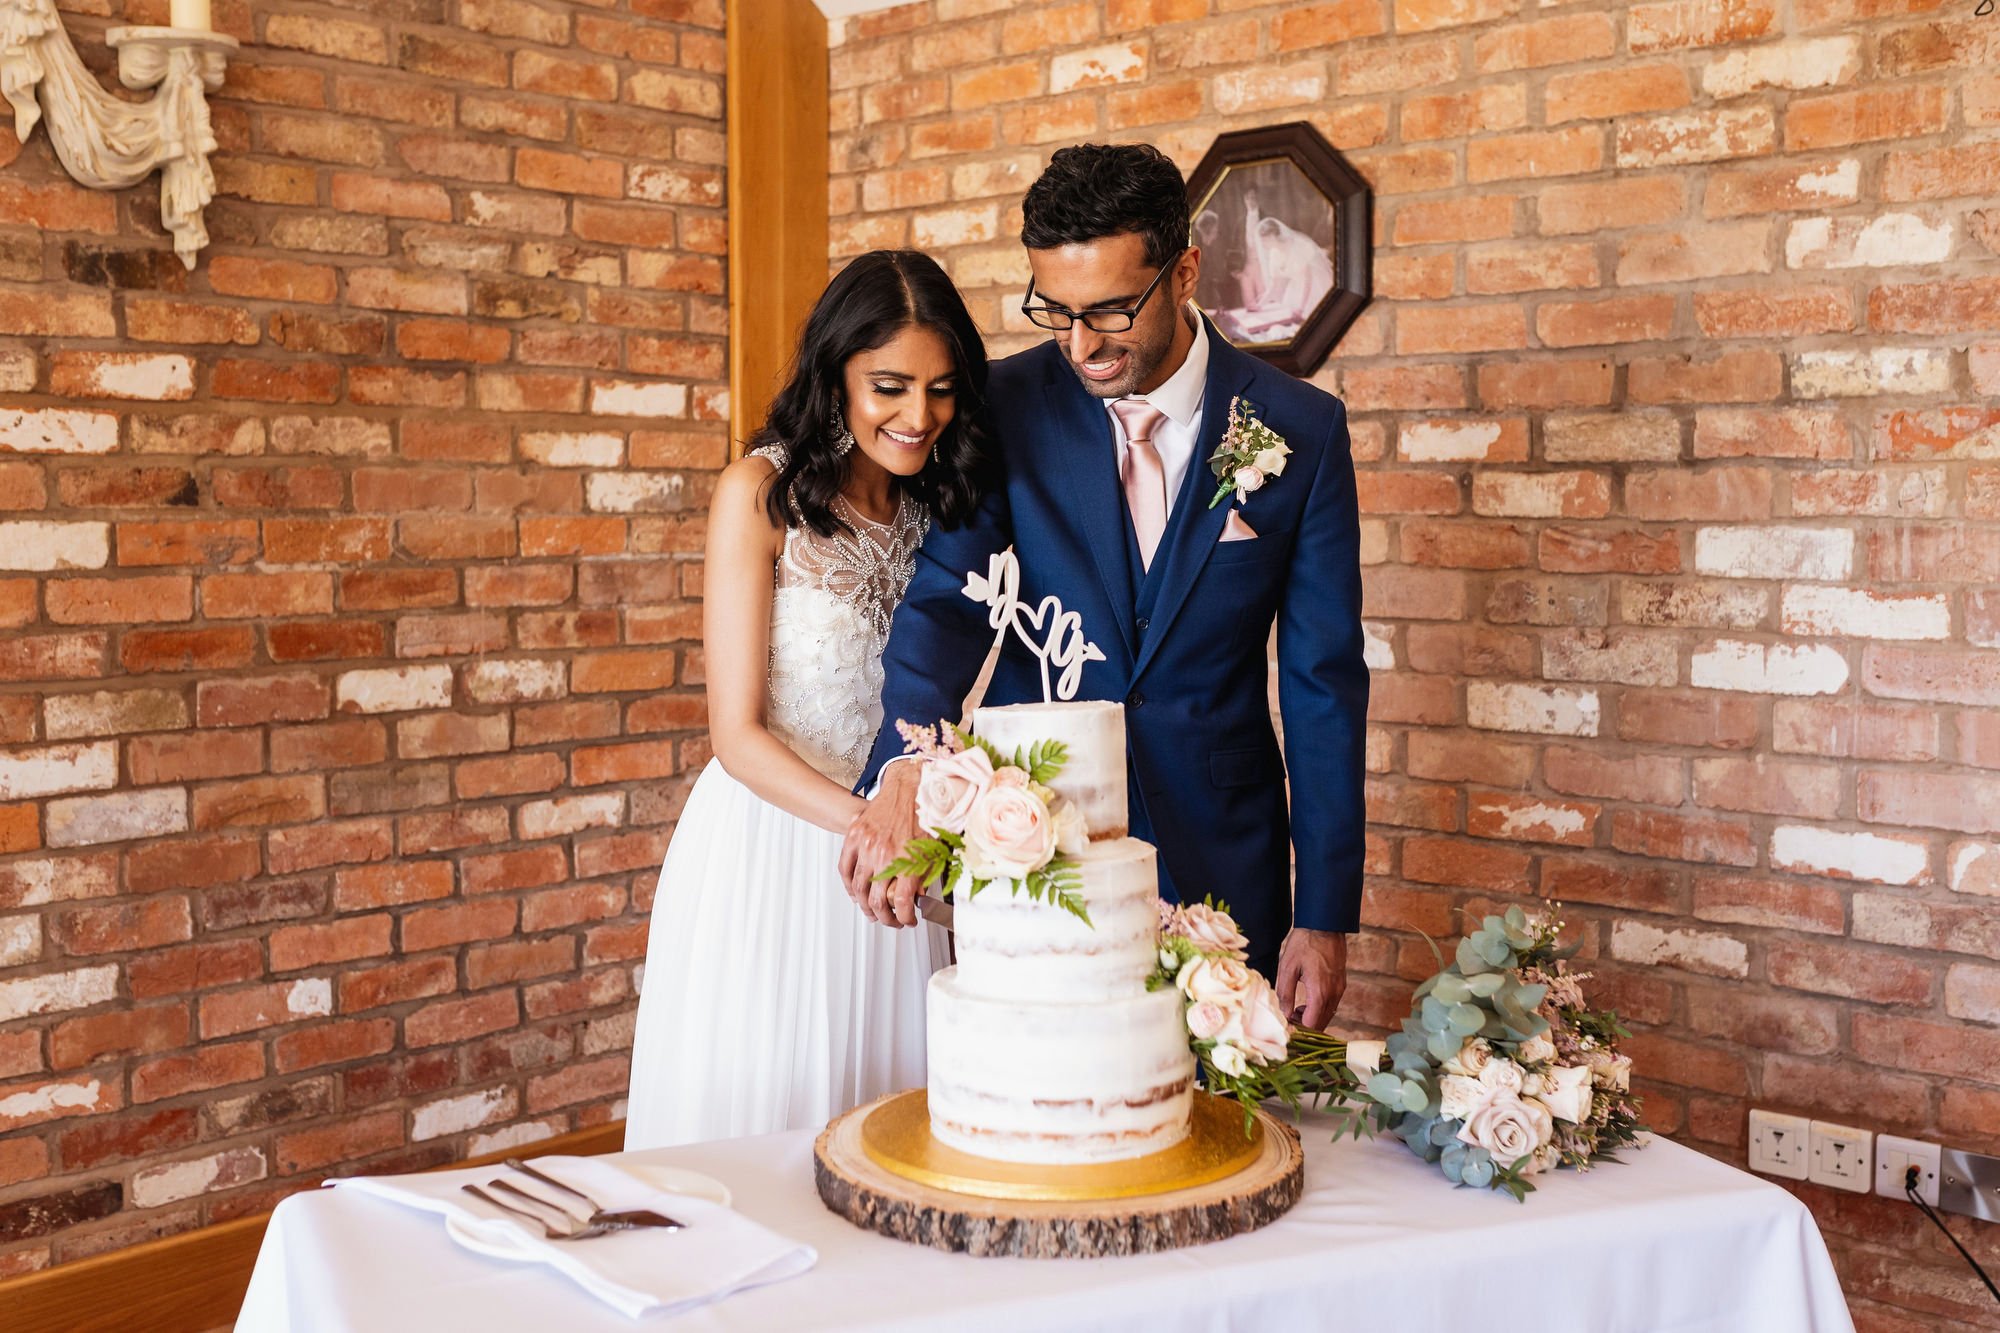 Keythorpe Manor, Leicester, Civil ceremony, Intimate wedding, cake cutting